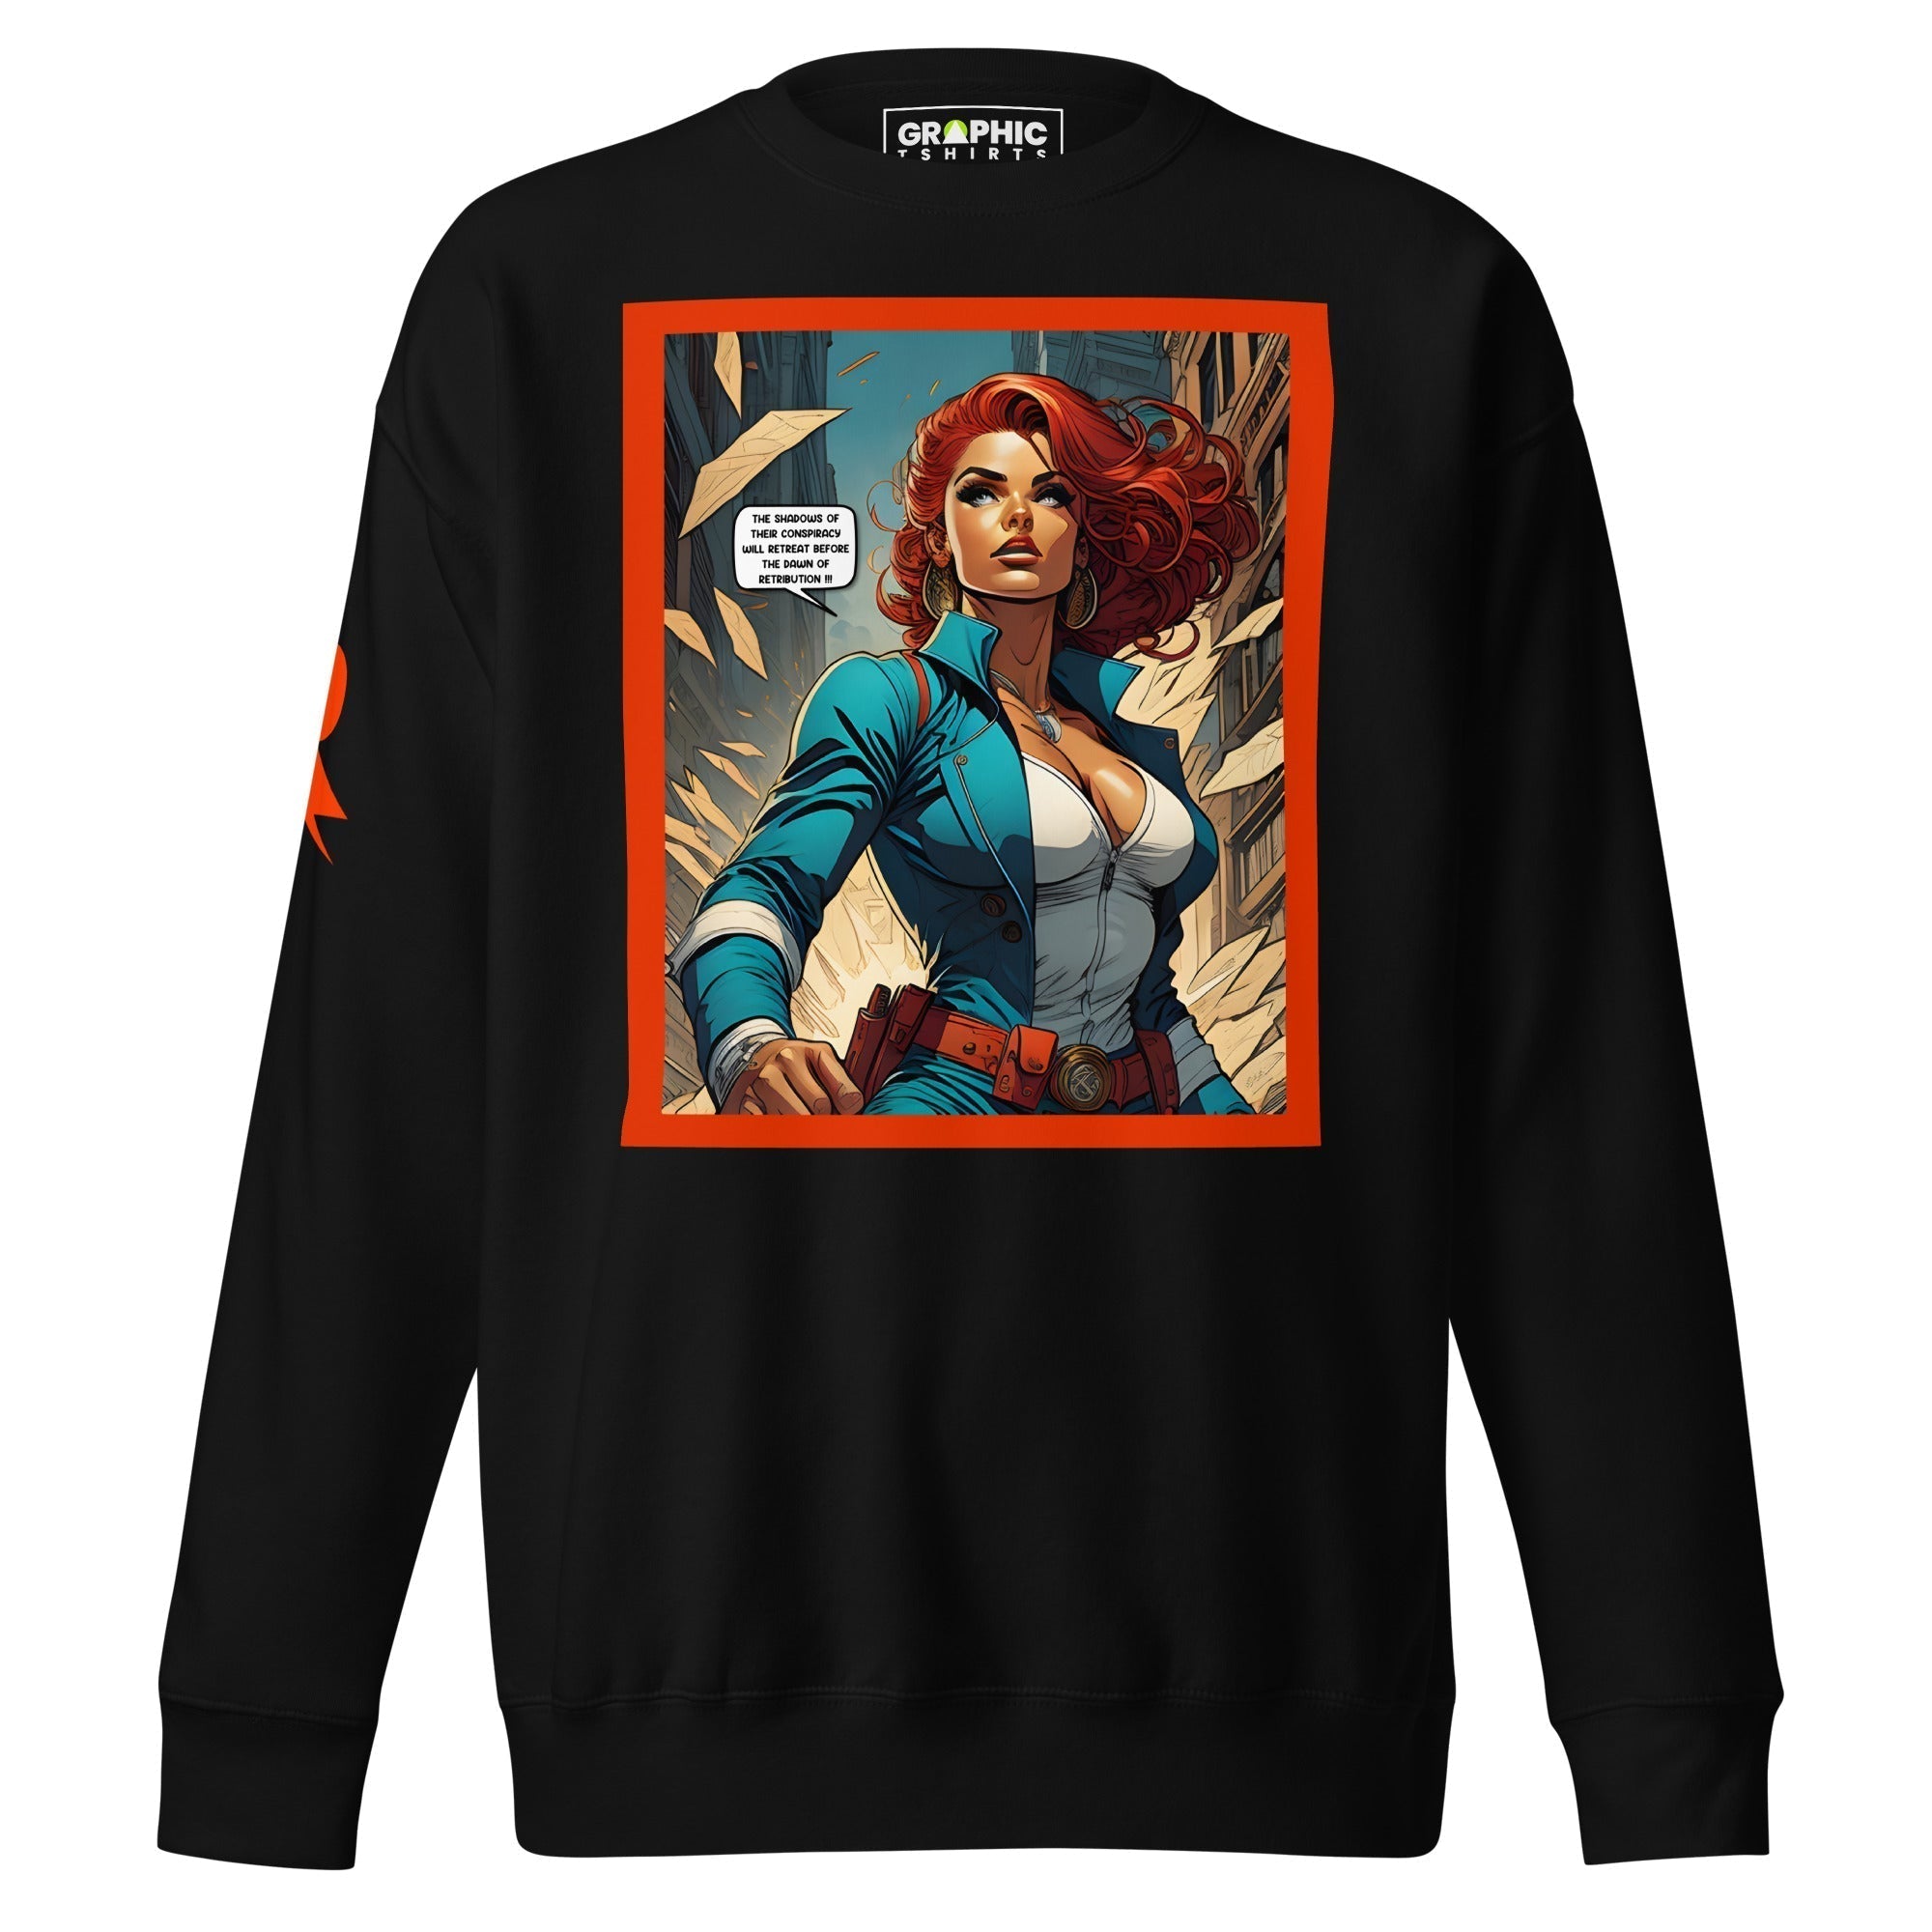 Unisex Premium Sweatshirt - Retribution: Heroes Unleashed v.38 - GRAPHIC T-SHIRTS